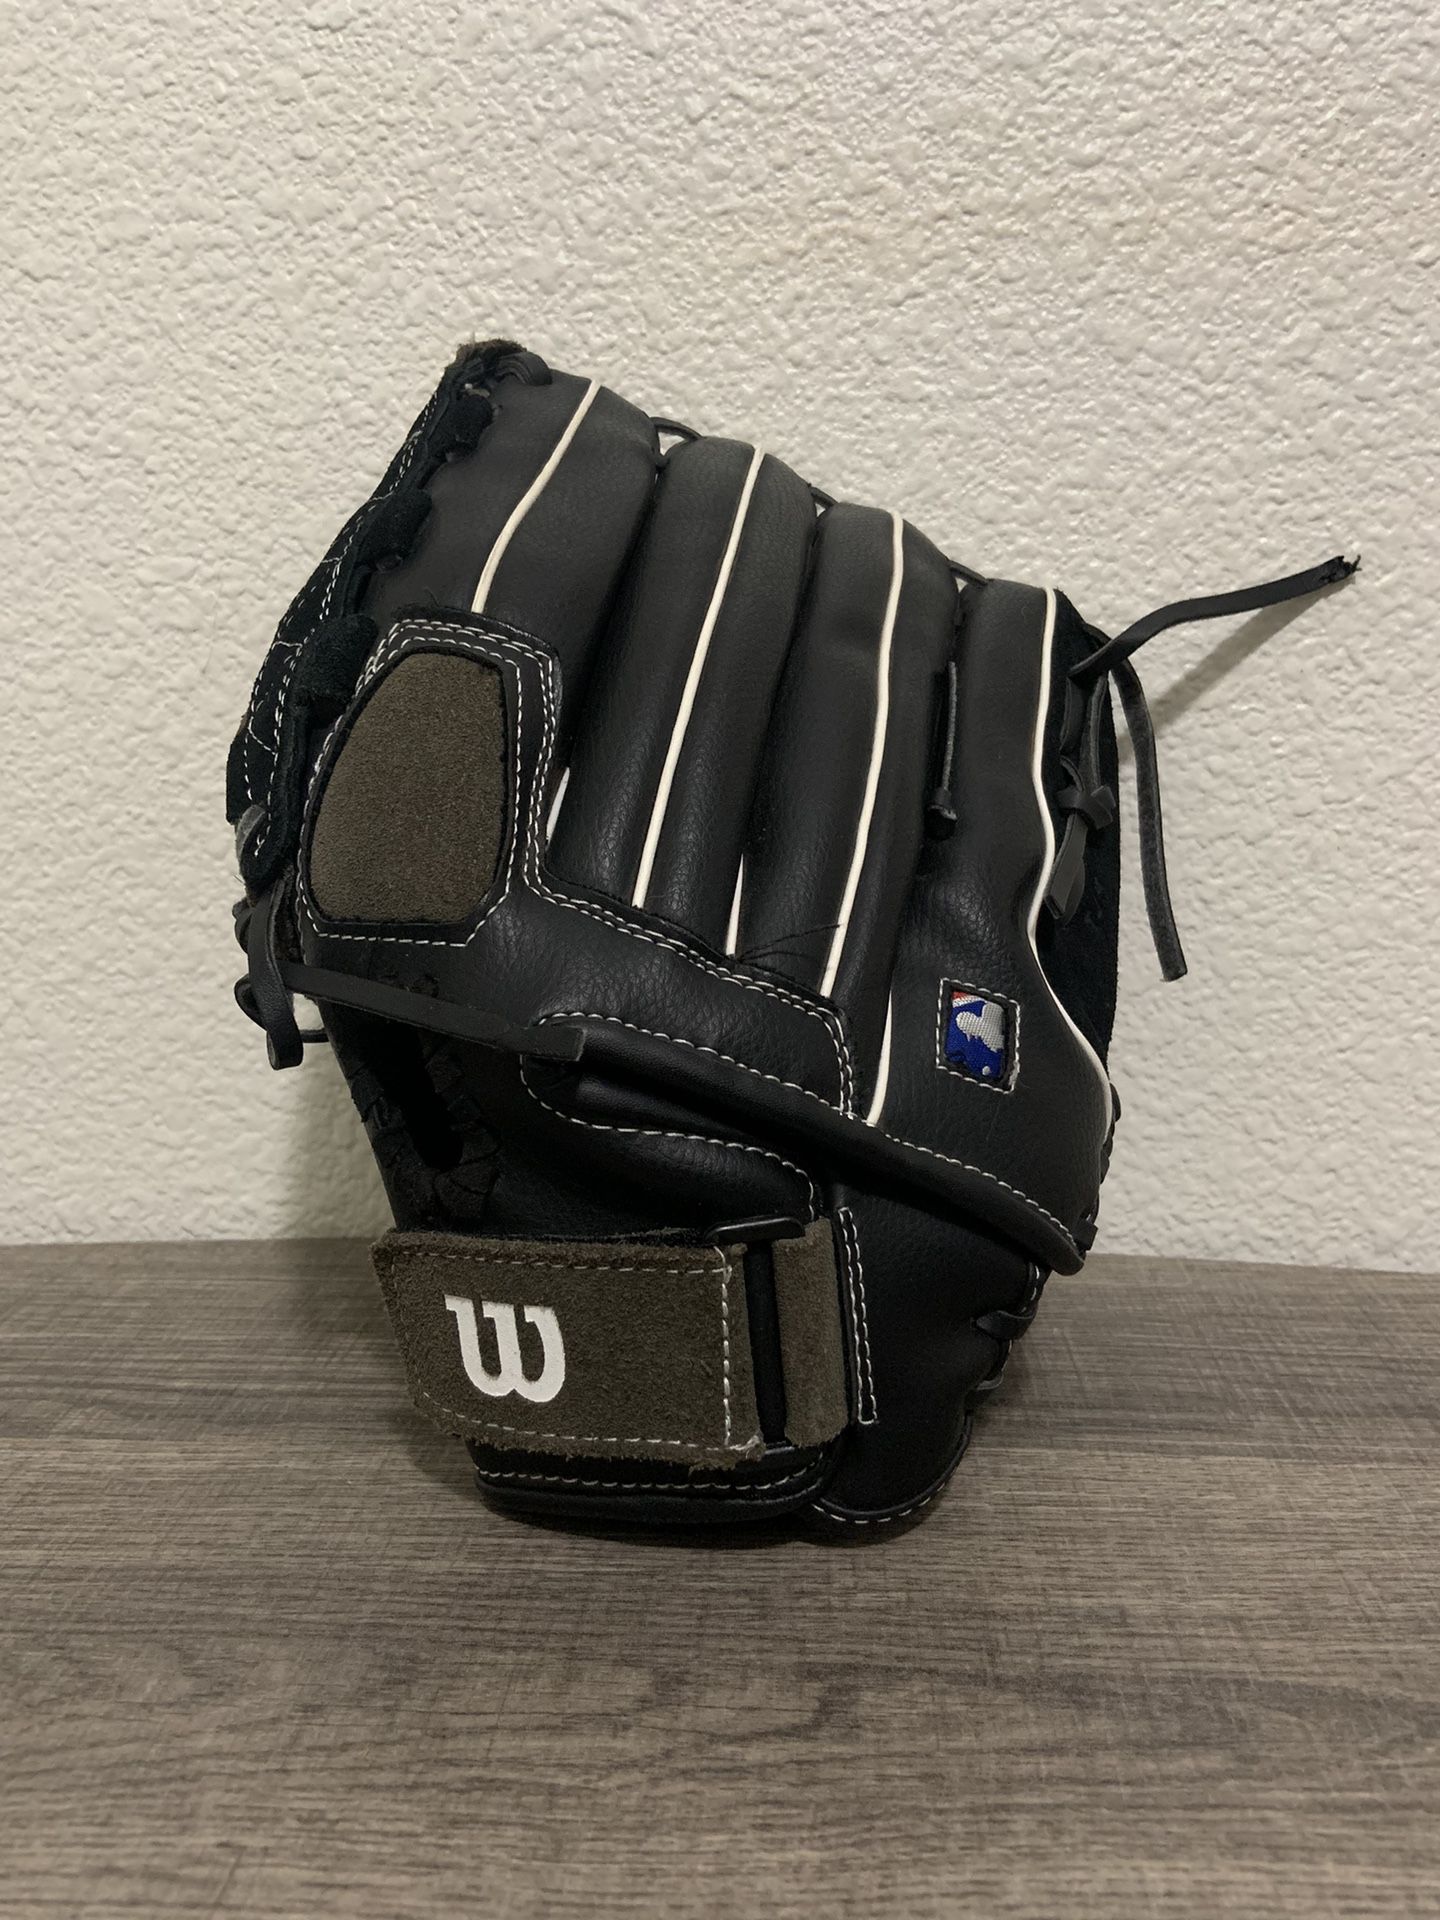 Wilson Softball/Baseball Glove